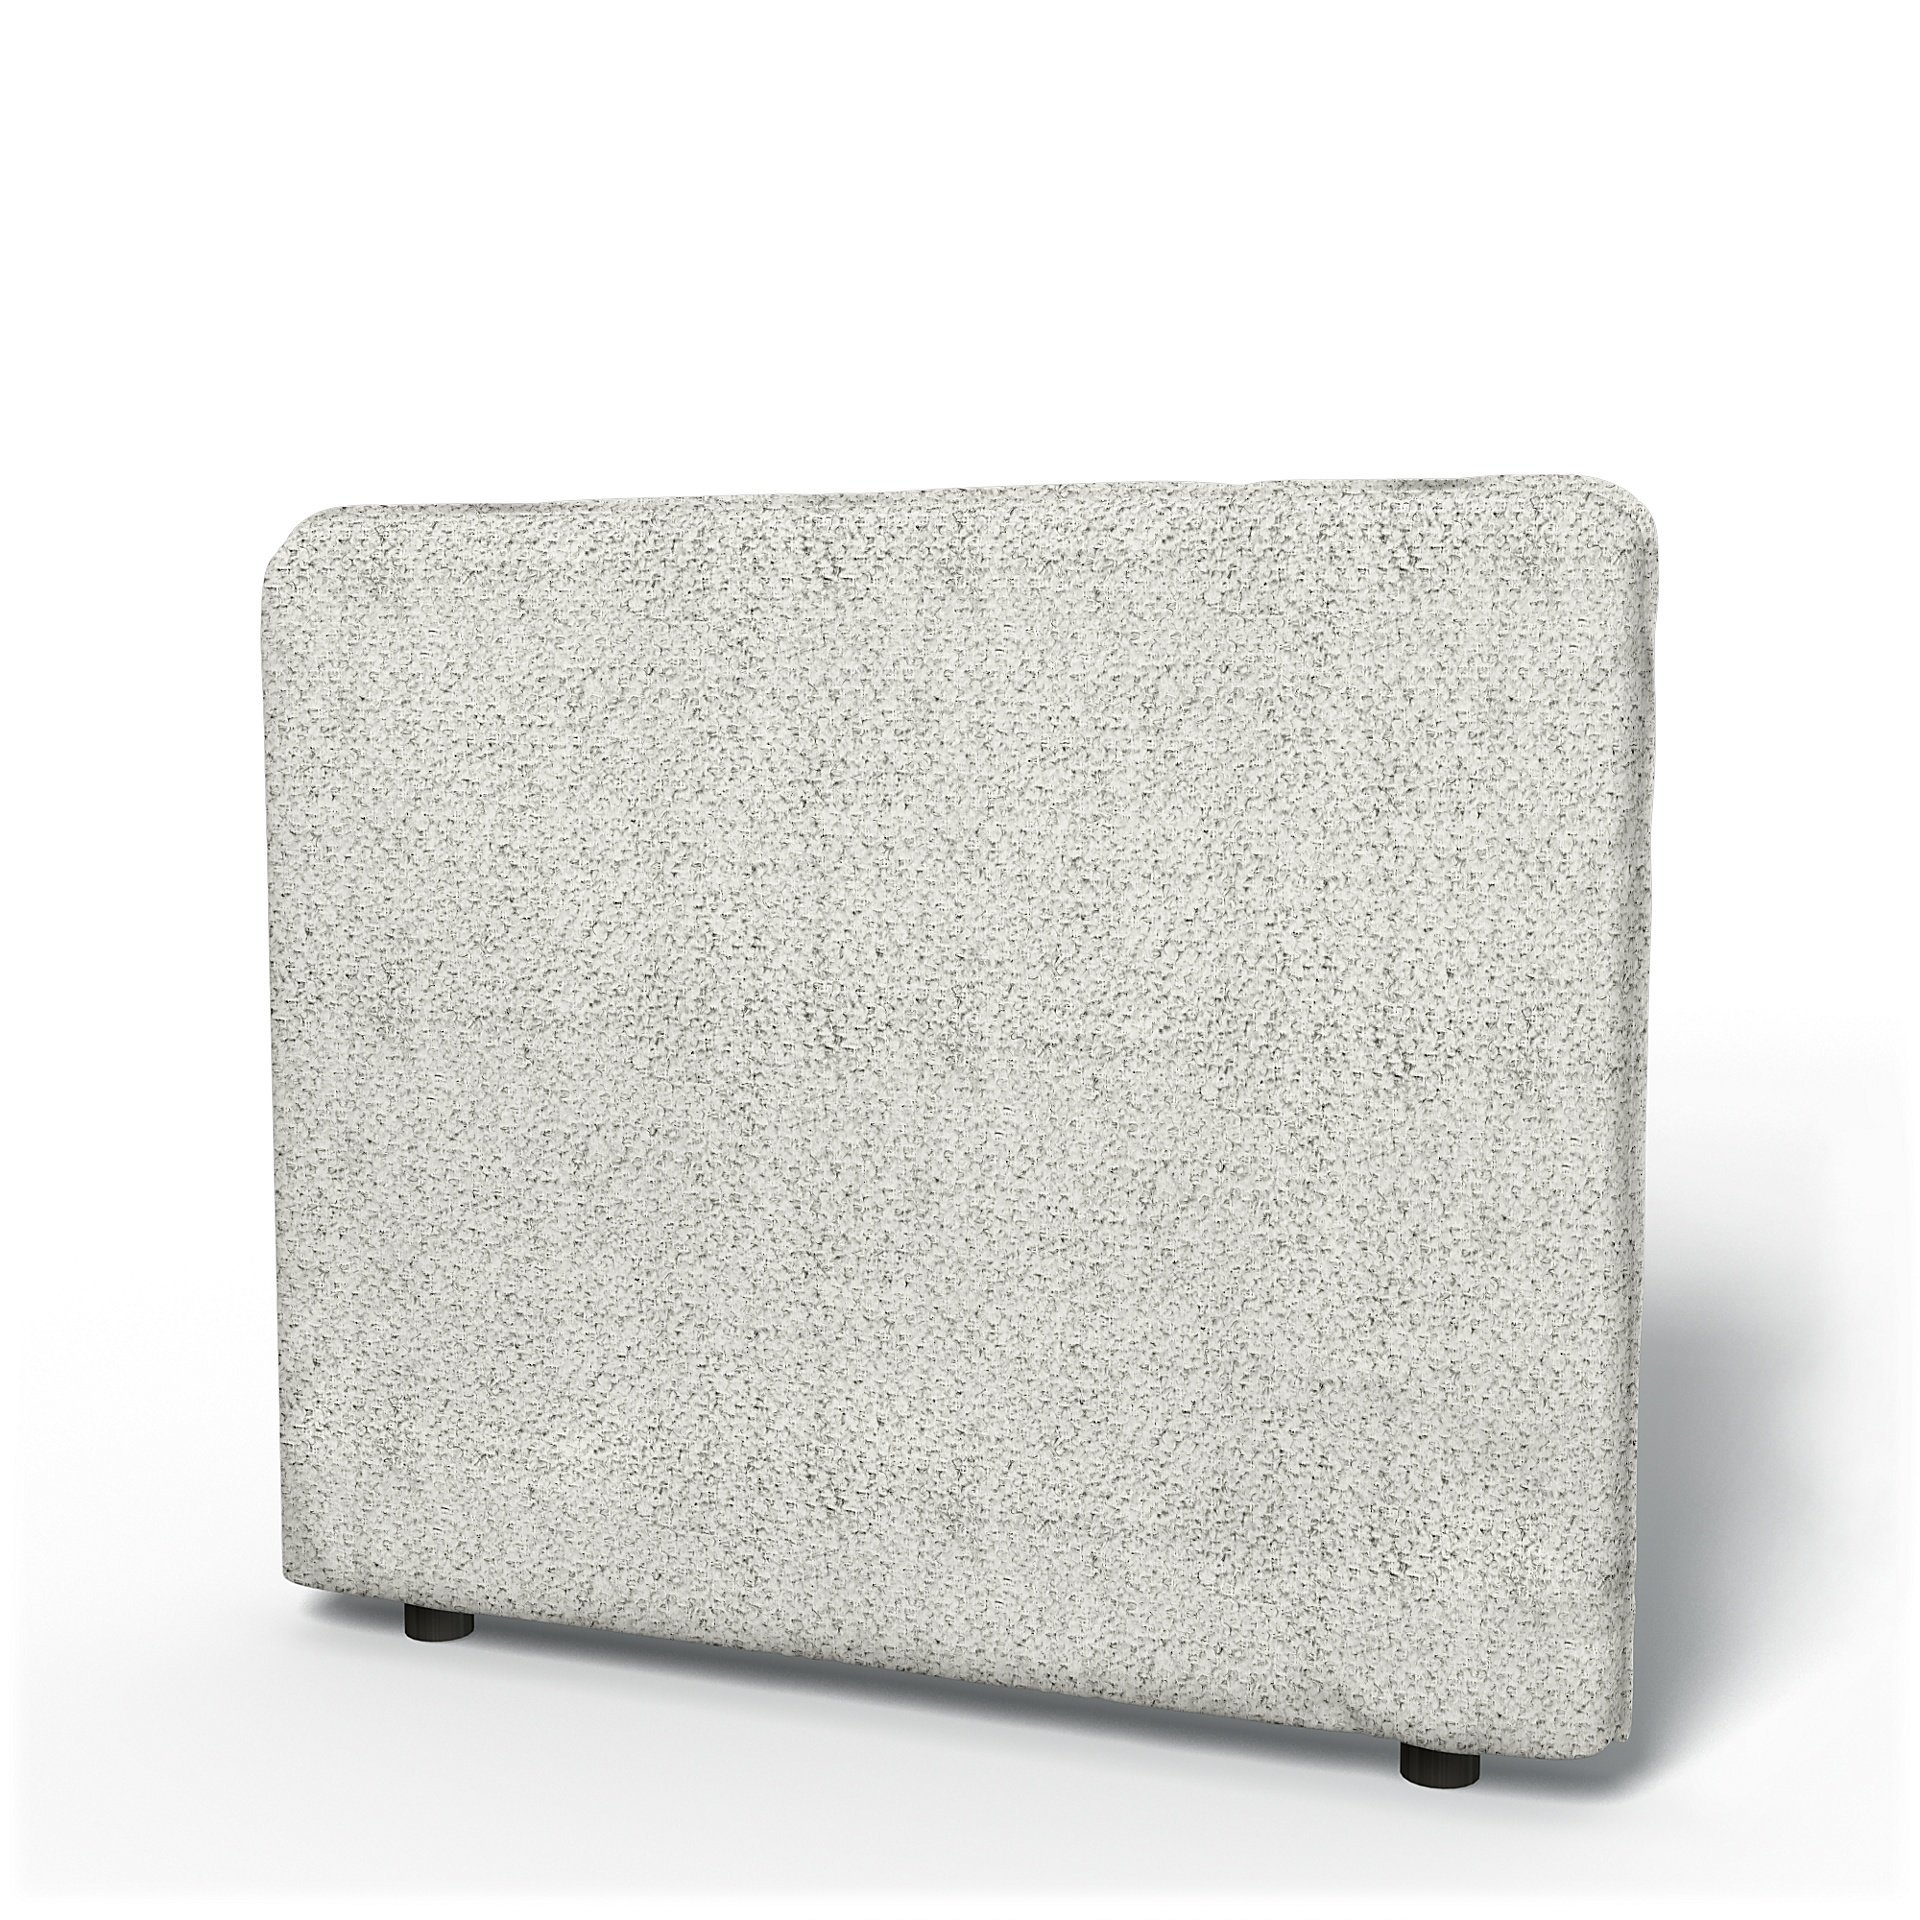 IKEA - Vallentuna Low Backrest Cover 100x80cm 39x32in, Ivory, Boucle & Texture - Bemz